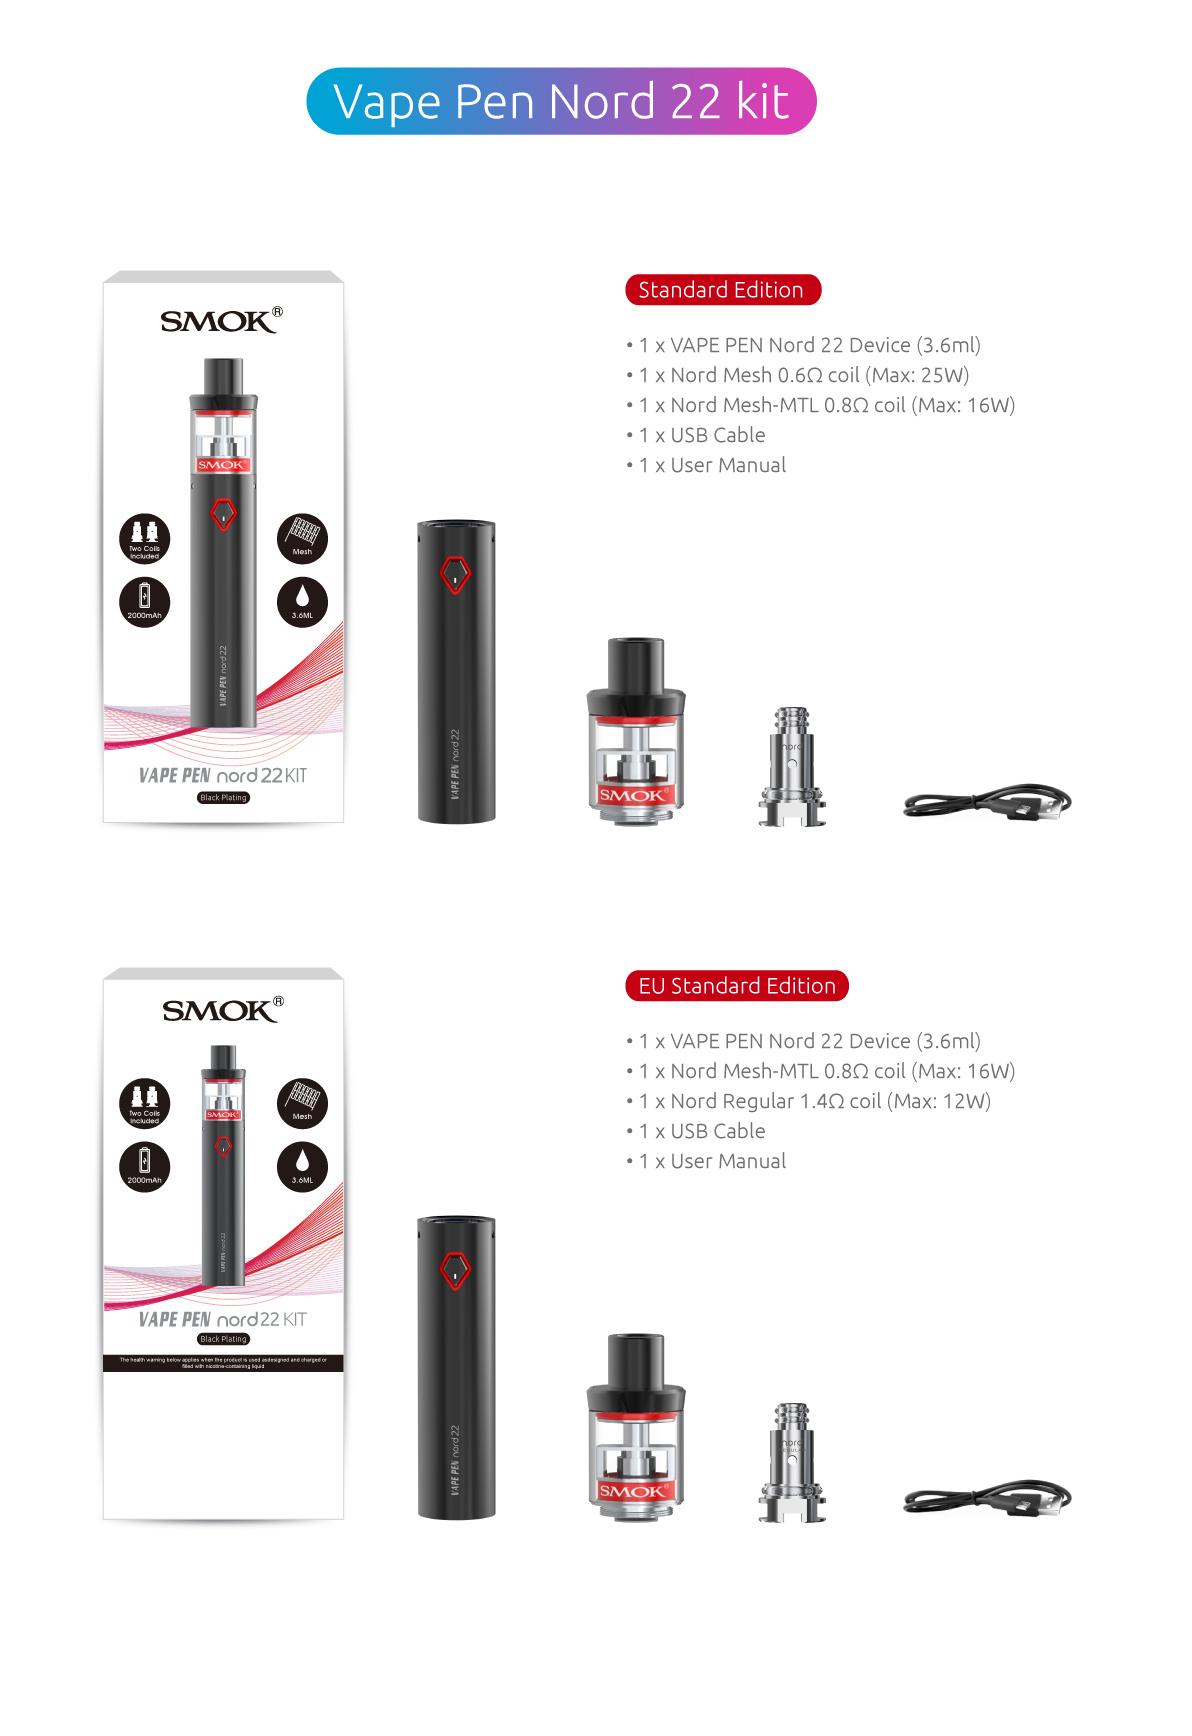 The Kit Includes - SMOK Vape Pen Nord 22 Mod